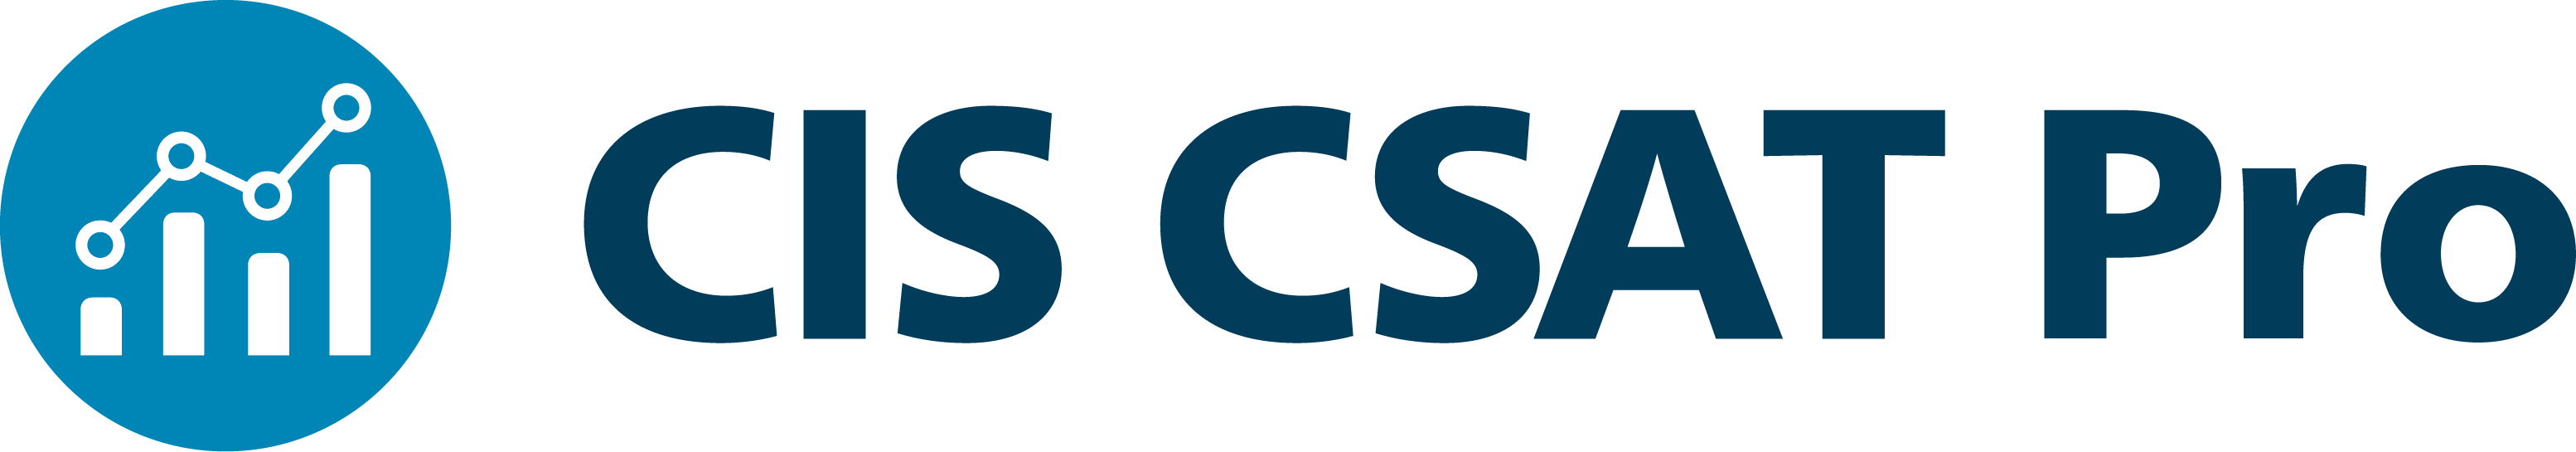 CIS CSAT Pro